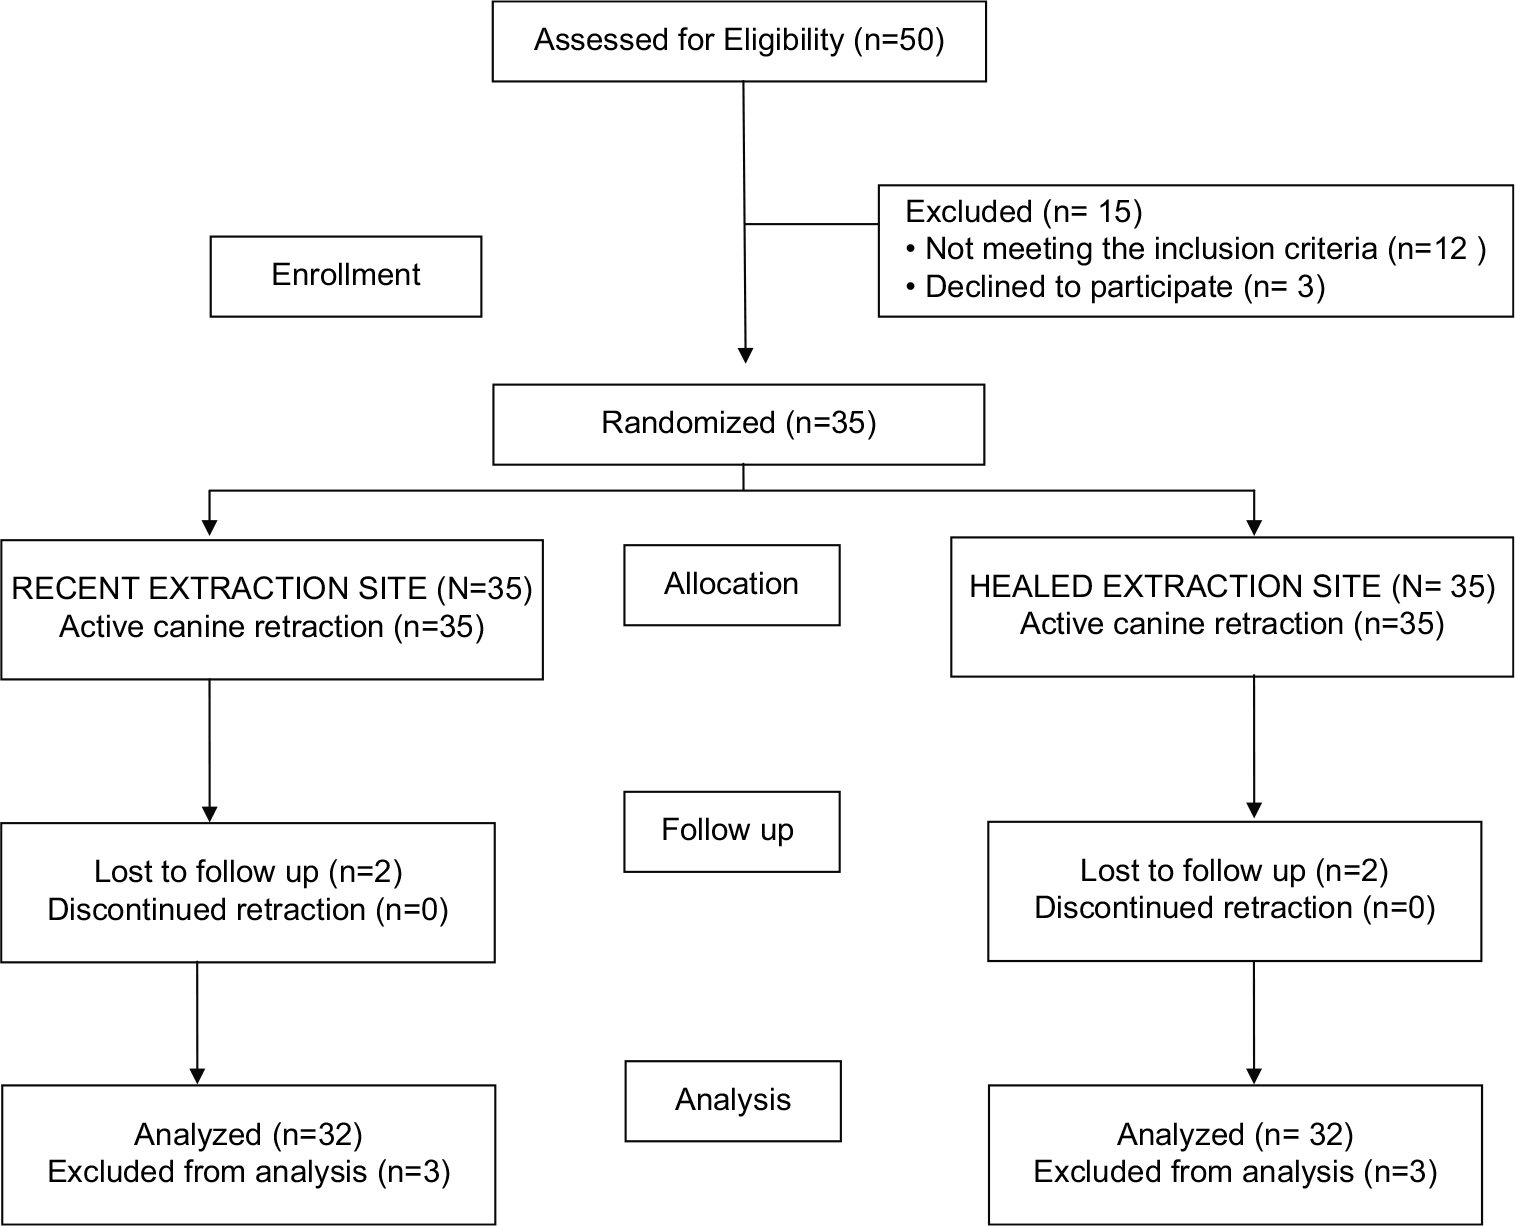 Consort patient flow diagram.